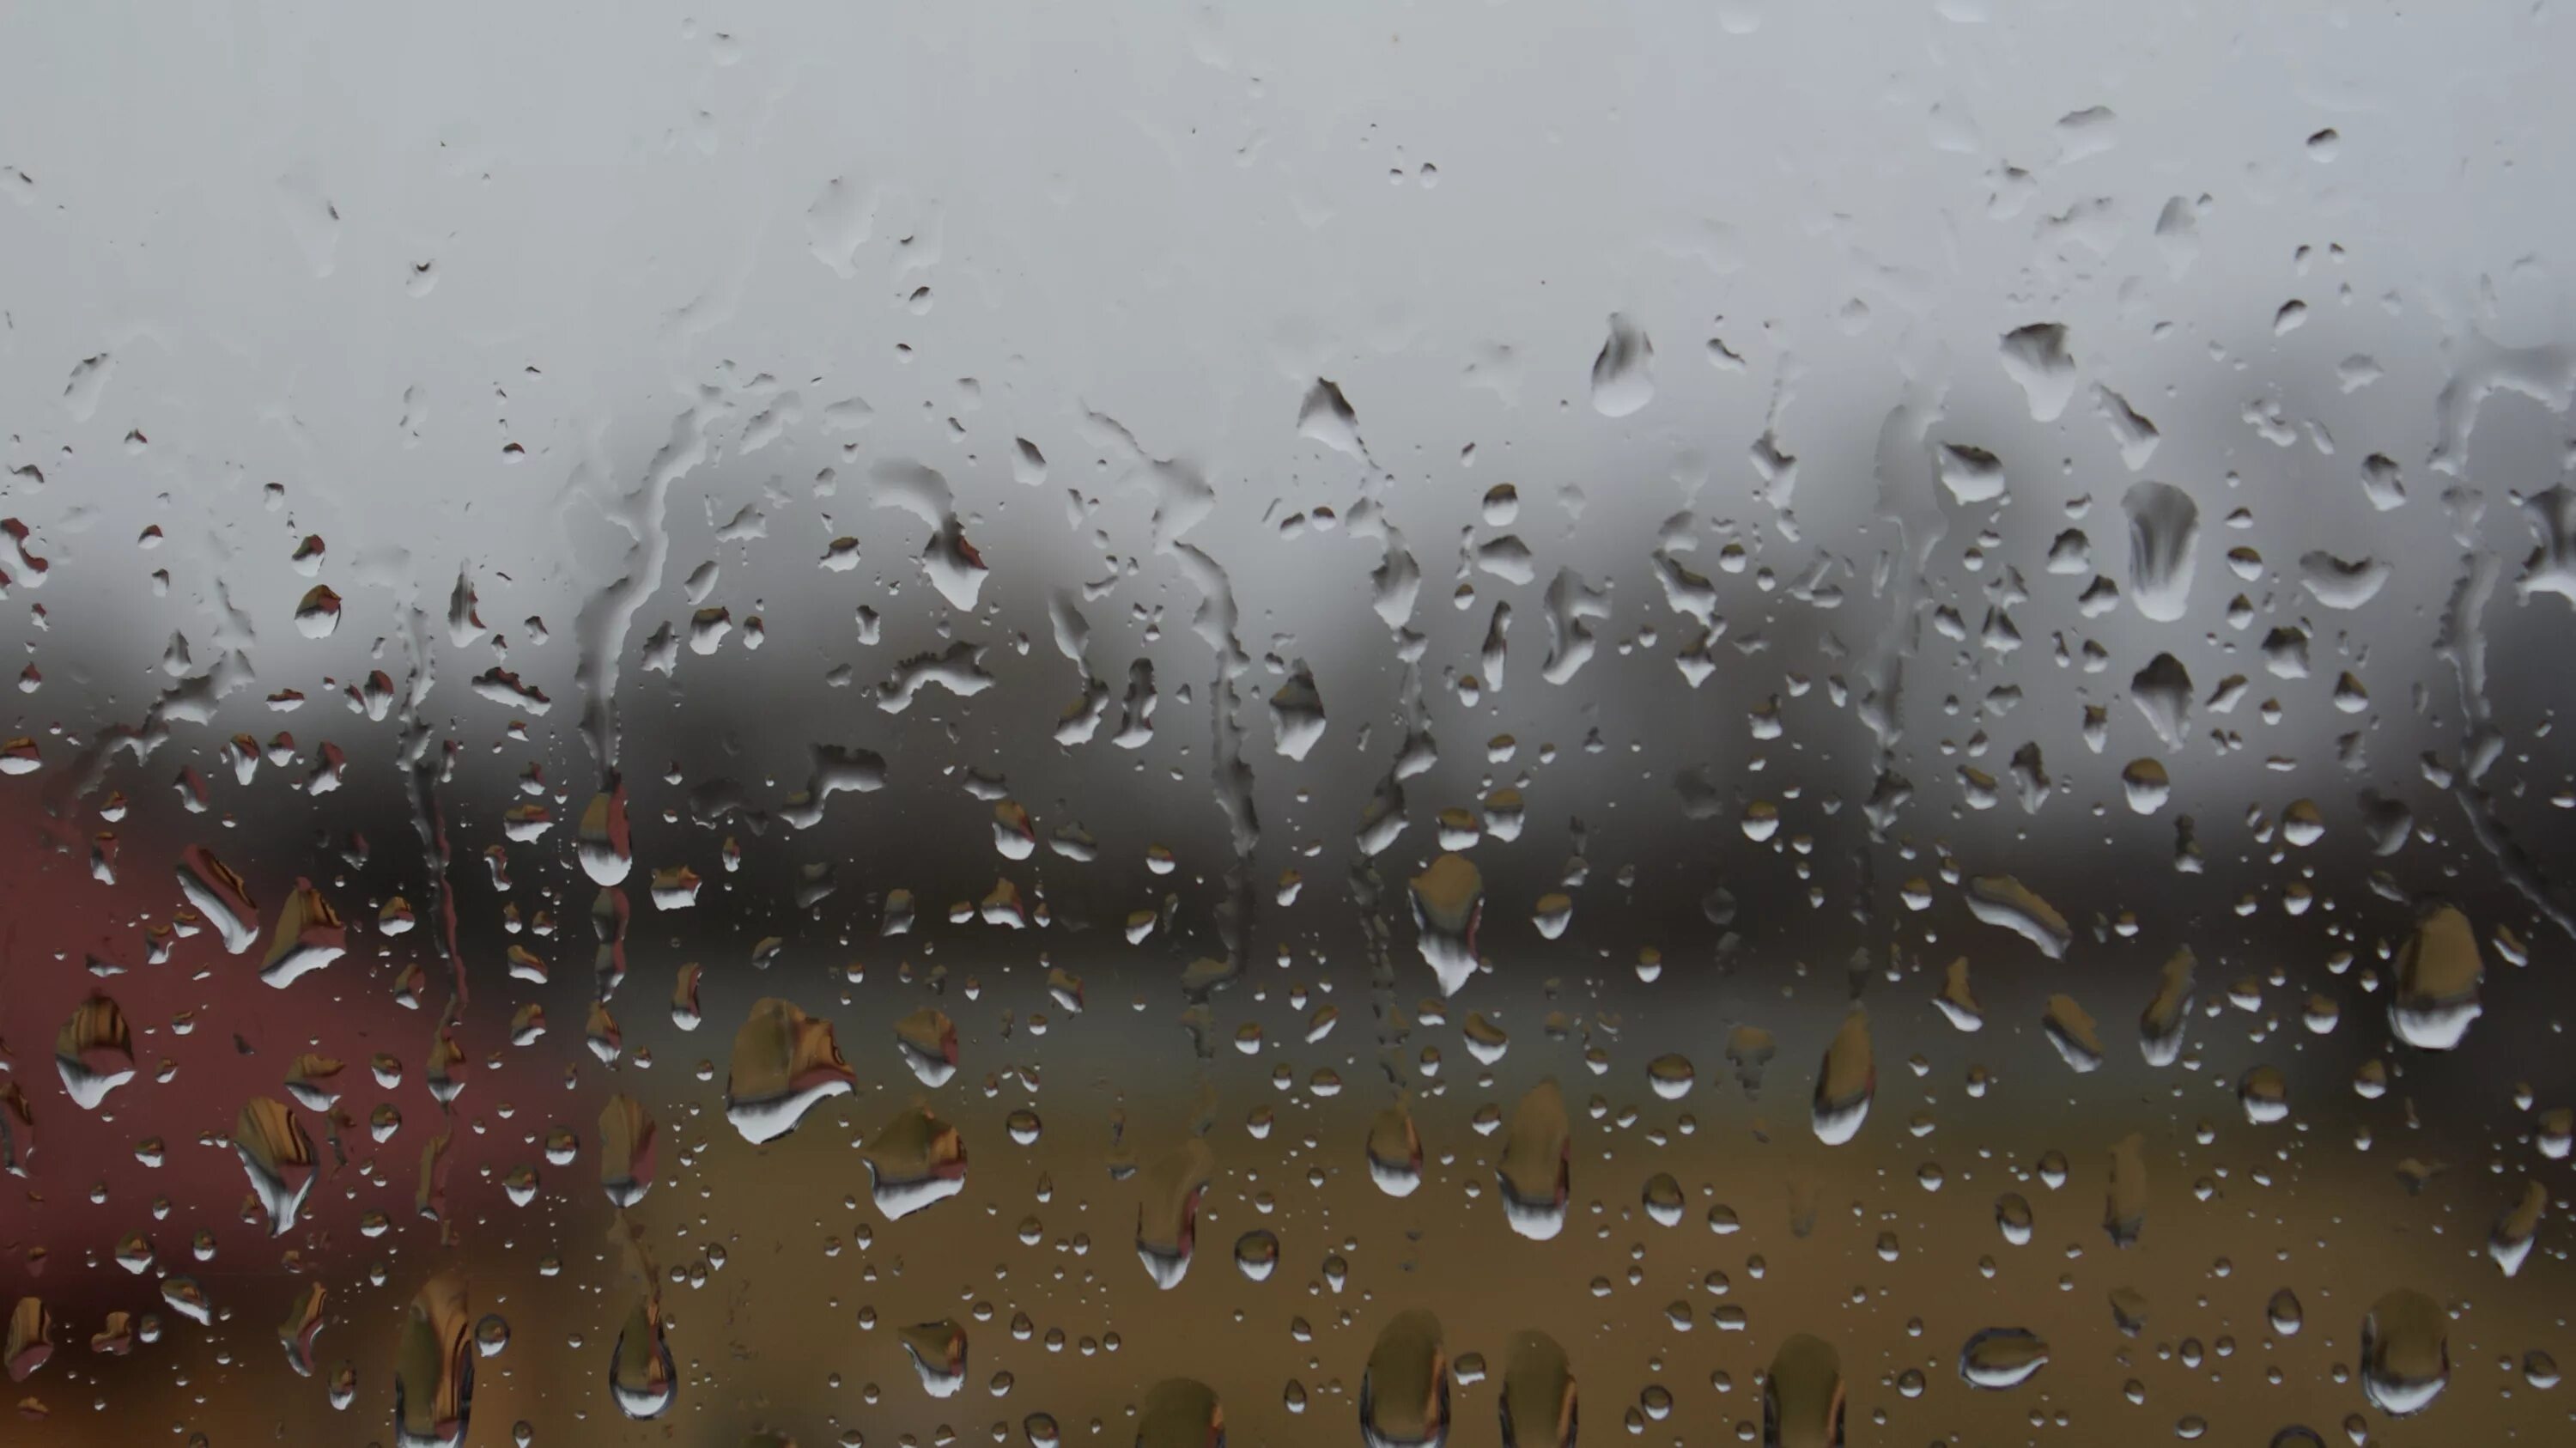 Капли на стекле. Обои дождь. Капли дождя на окне. Фон капли на стекле.